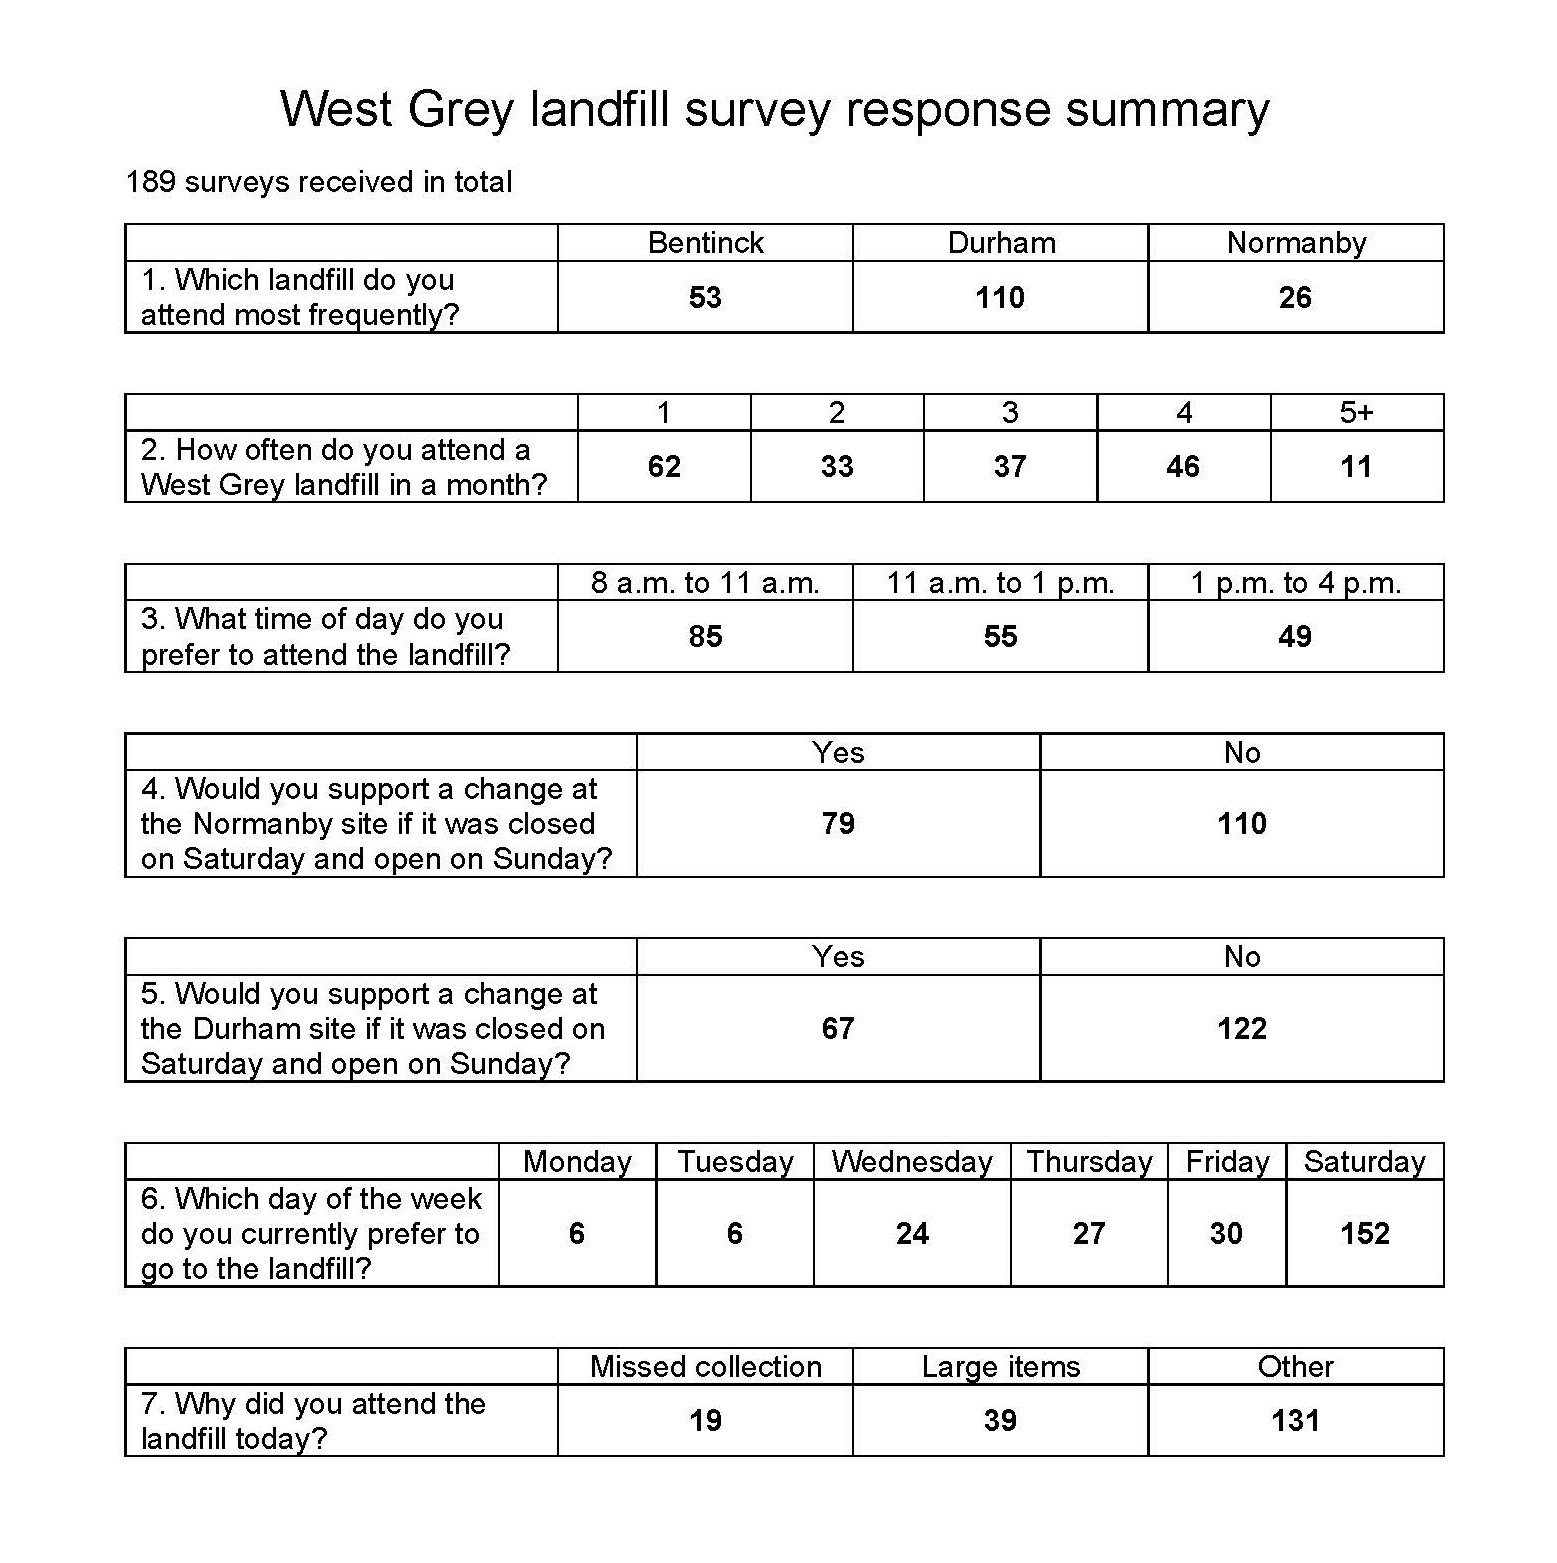 West Grey landfill survey summary results